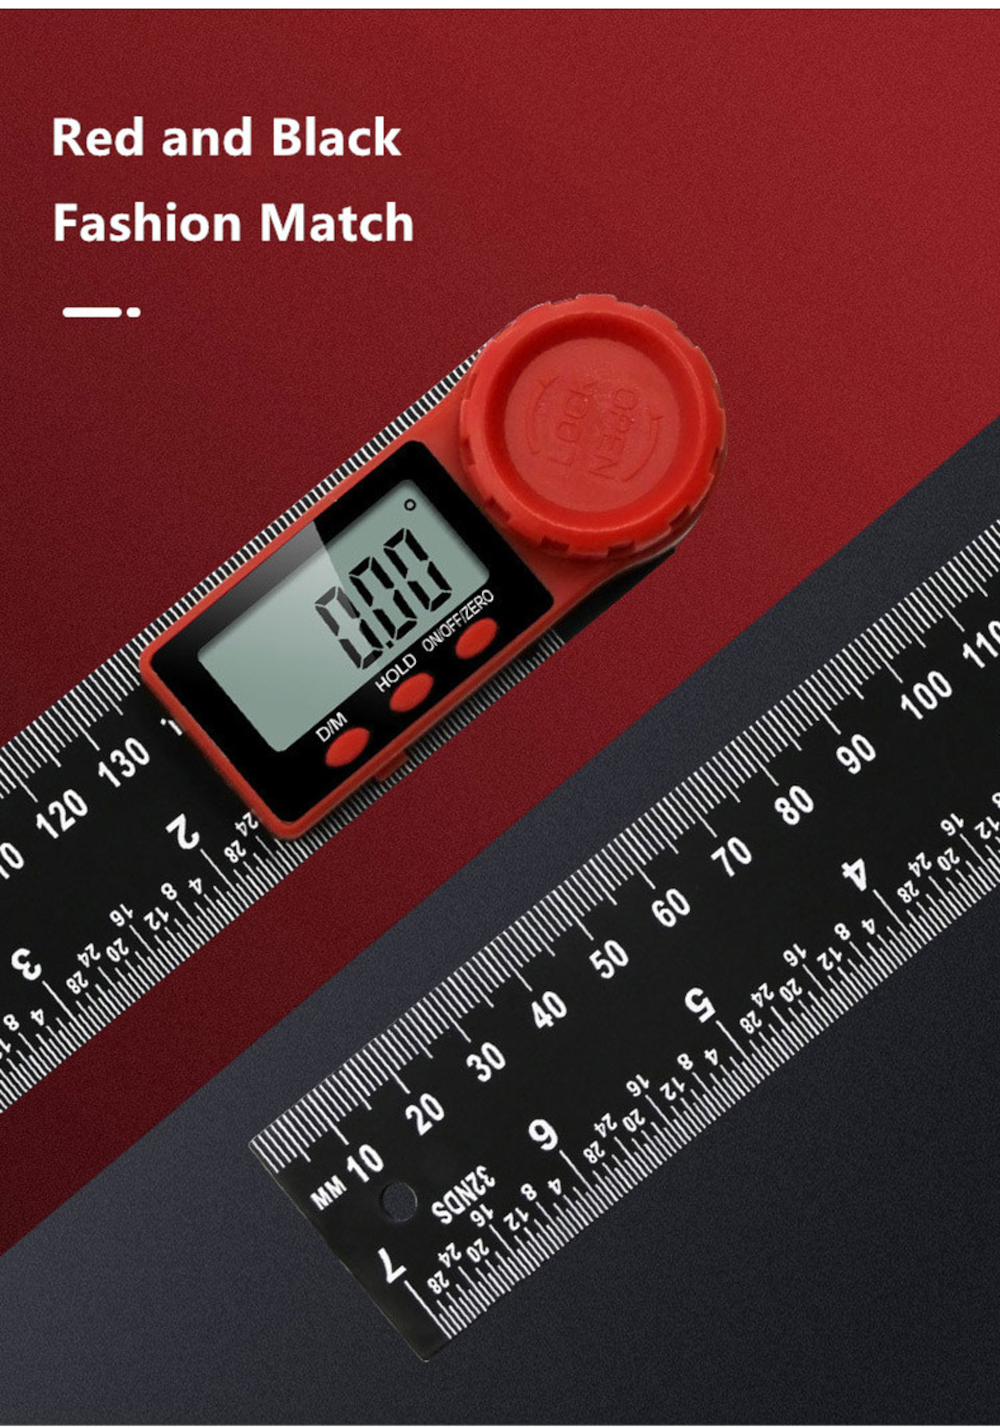 200300mm-360-Degree-LCD-Digital-Display-Angle-Ruler-Inclinometer-Goniometer-Protractor-Measuring-Too-1791660-6